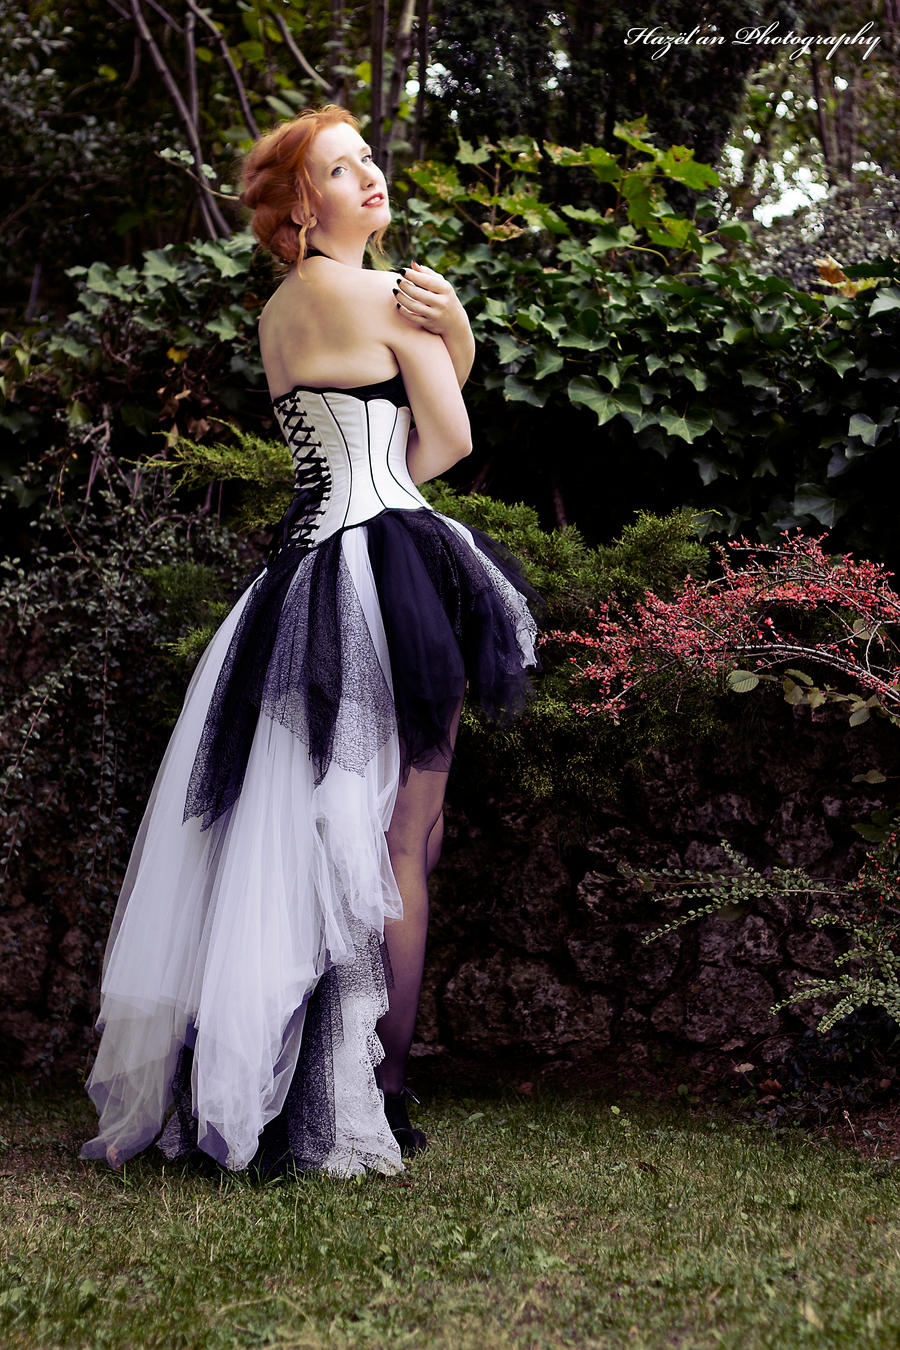 White underbust corset dress 2012 collection '' by Esaikha on DeviantArt